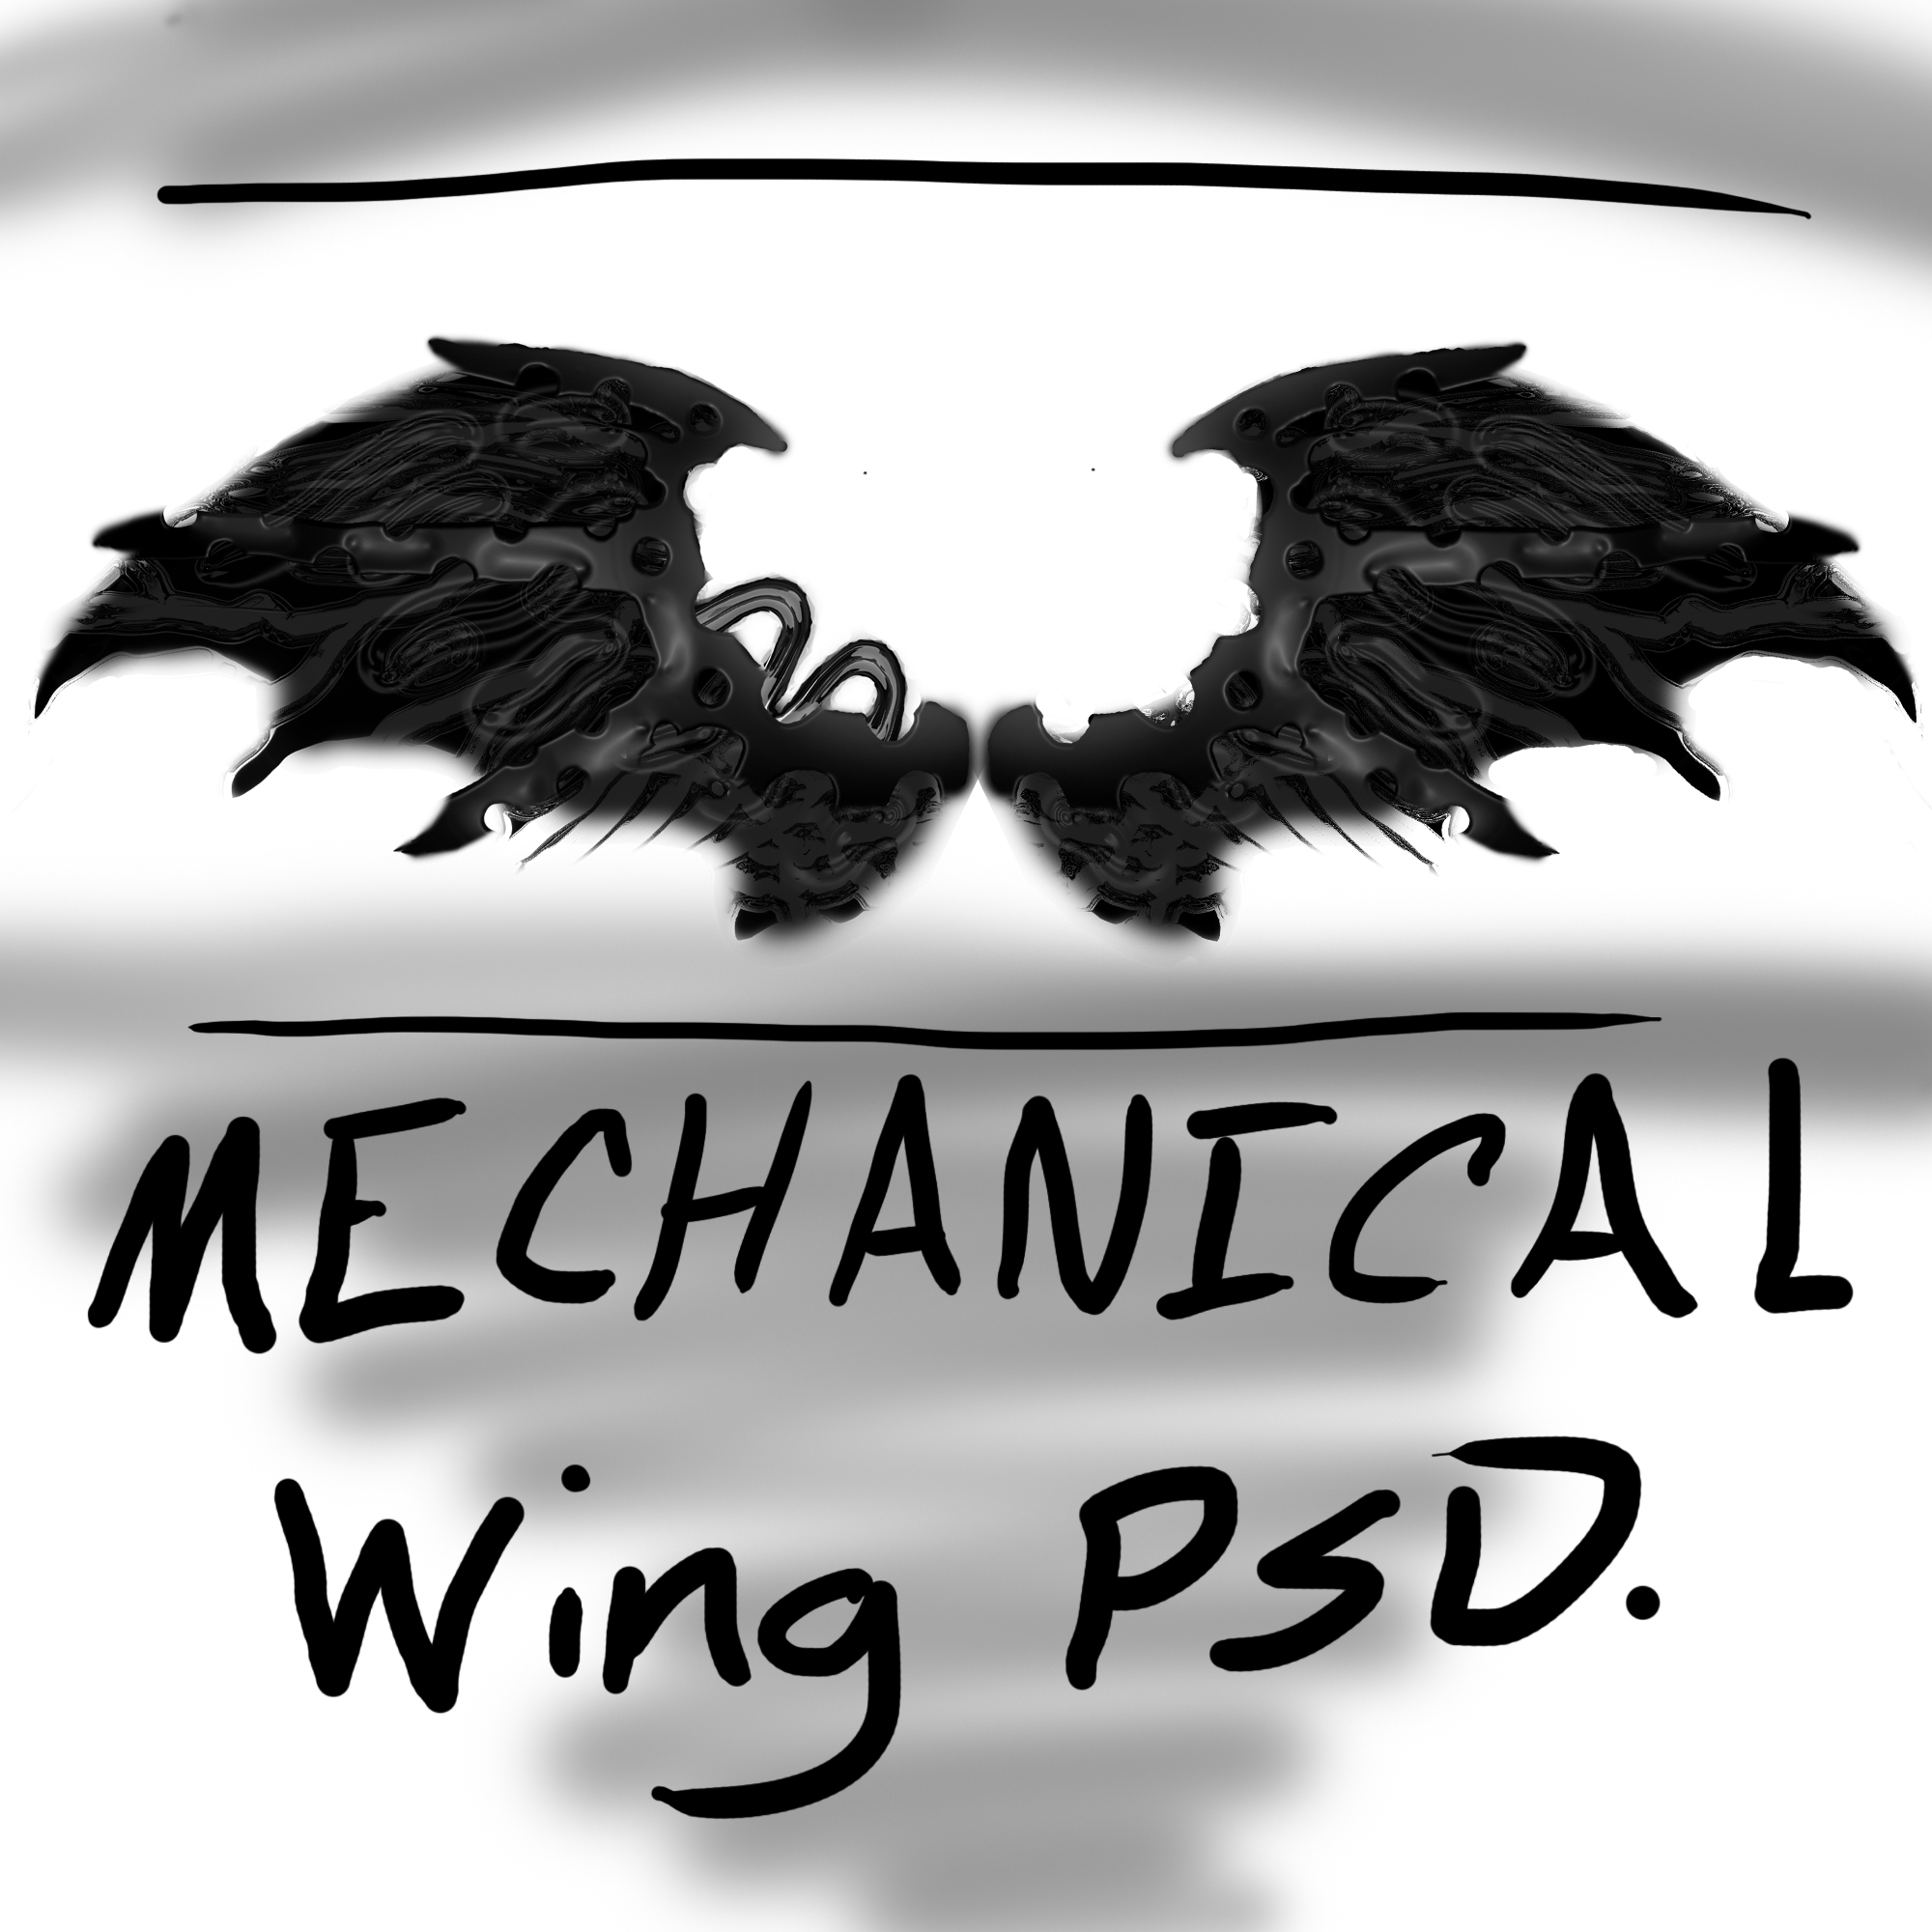 Mechanical Bat Wings